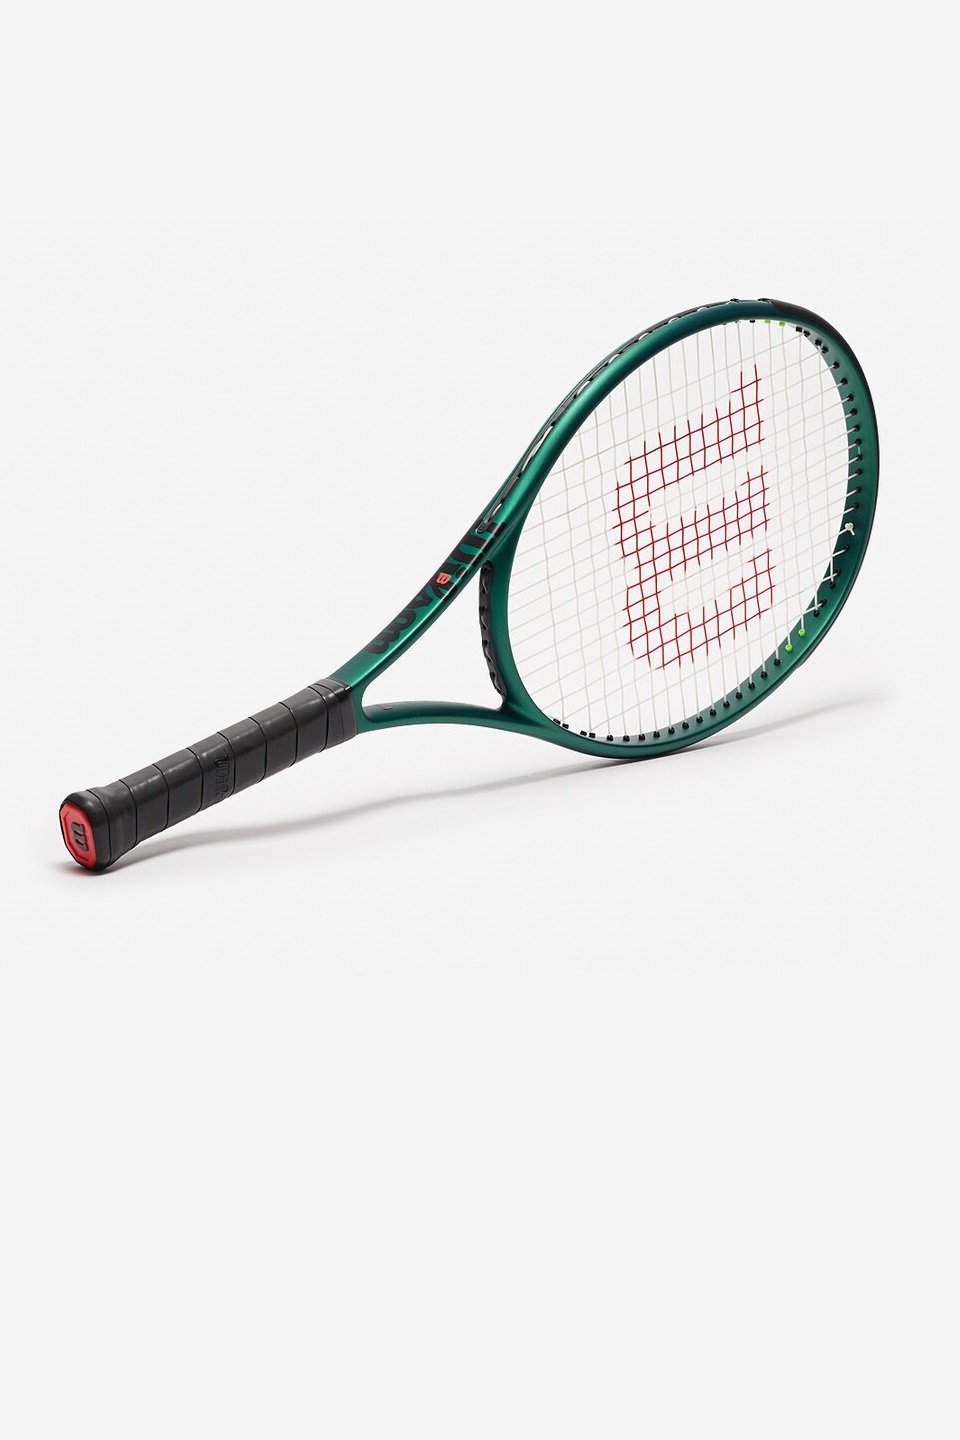 NIKE - WİLSON BLADE 25 V9 Tenis raketi